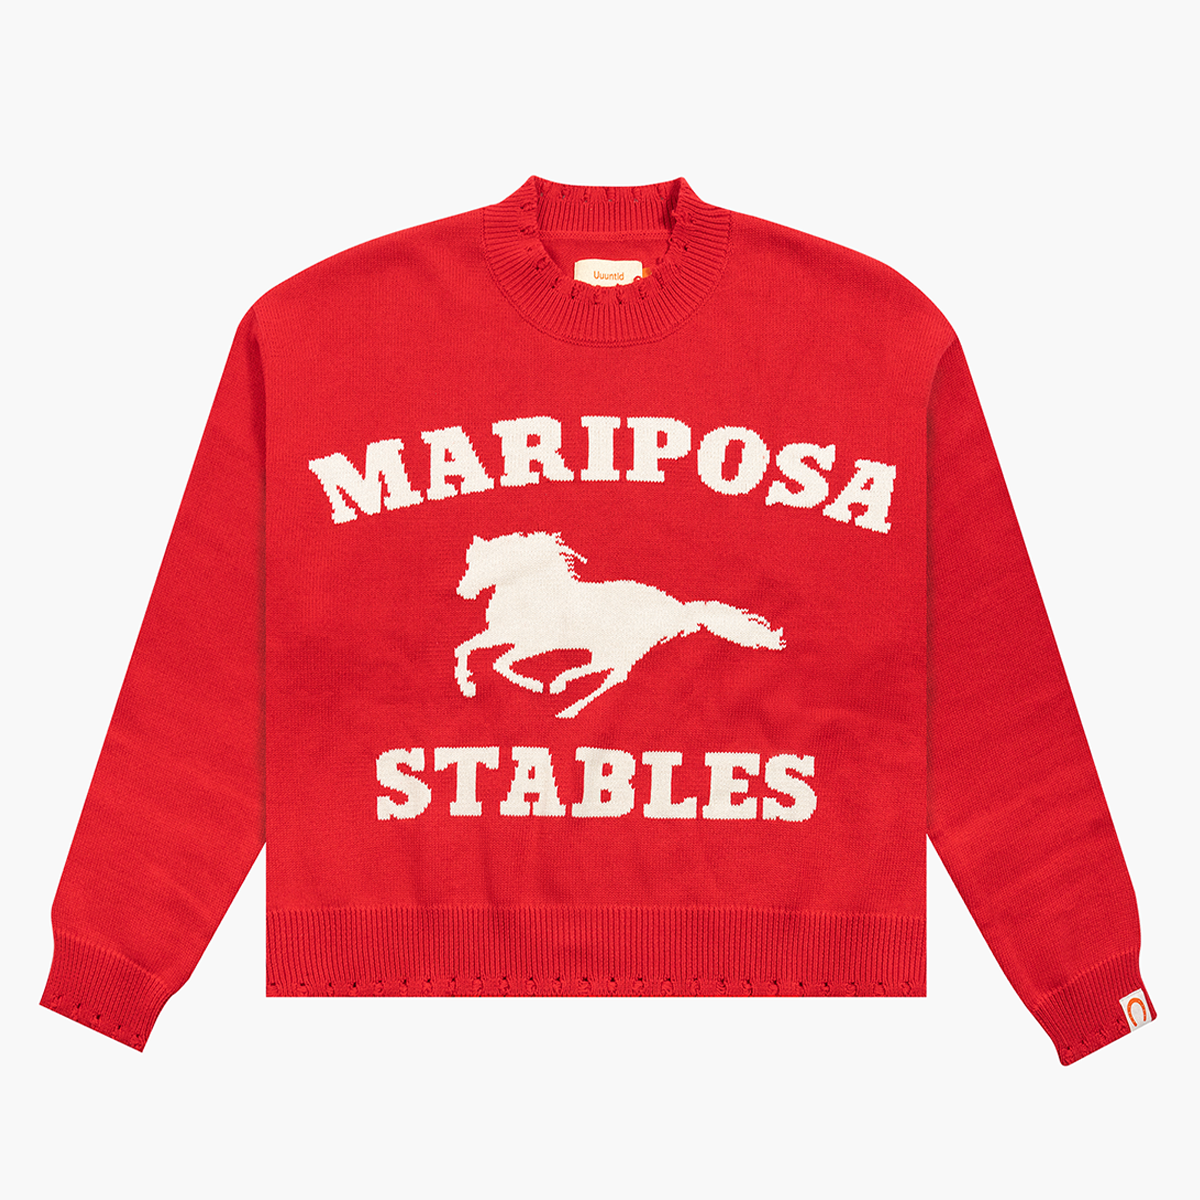 Mariposa Stables-Knit-Wear-uuuntld